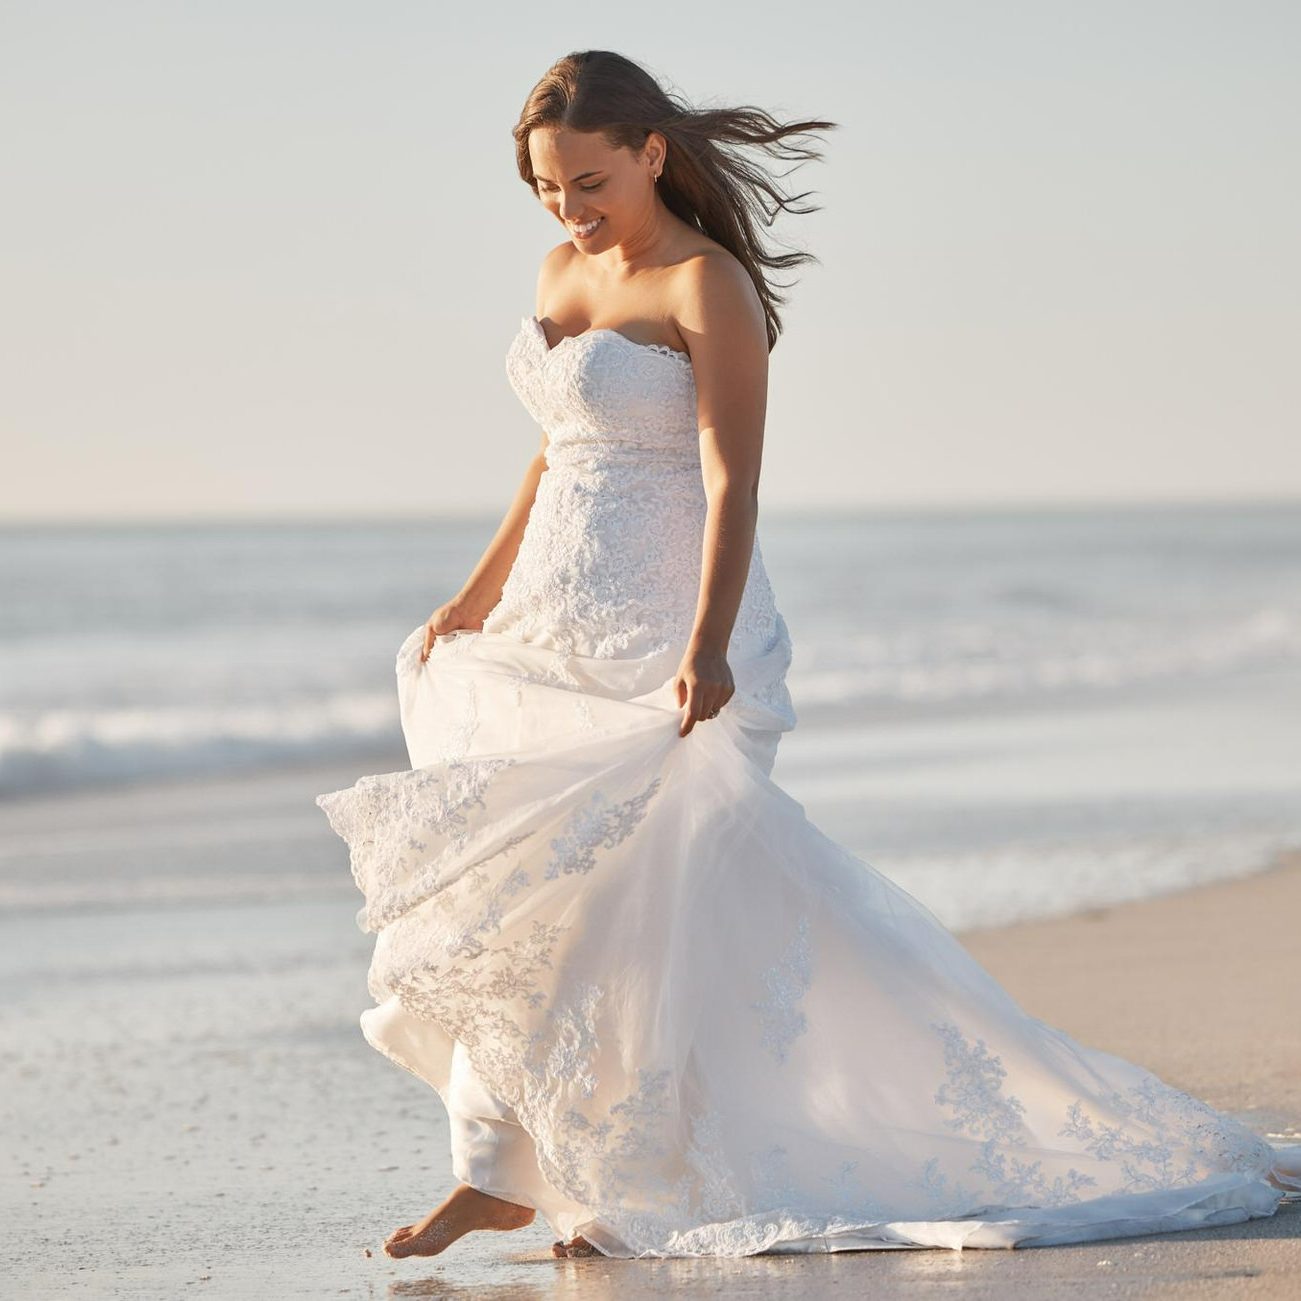 wedding-waves-bride-walking-beach-australia-special-day-summer-happy-barefoot-woman-luxury-designer-dress-feet-sand-nature-walk-by-ocean-after-marriage-ceremony-sea_1